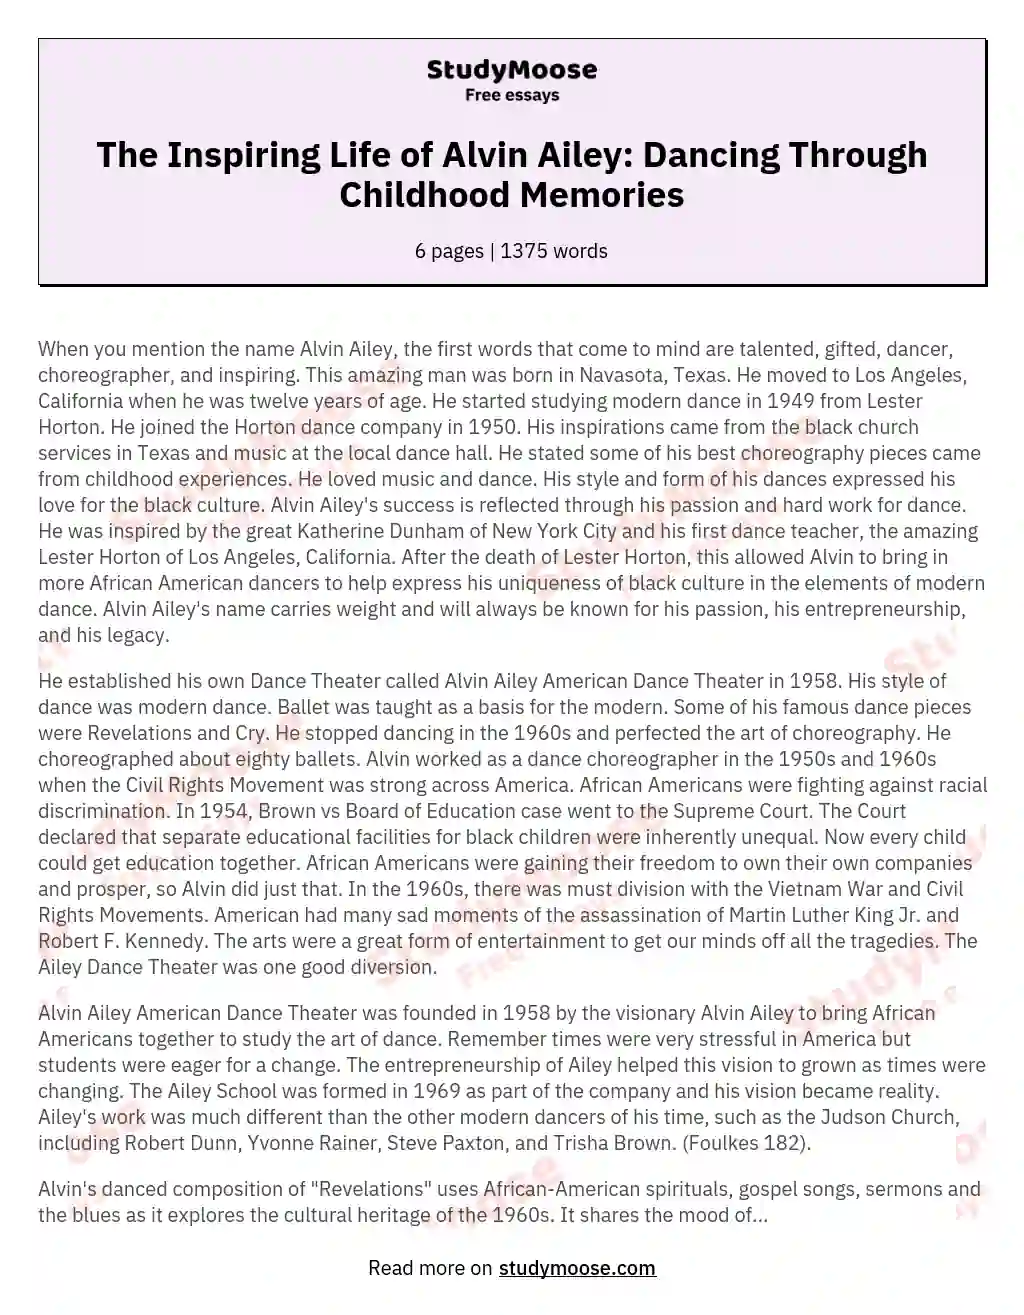 The Inspiring Life of Alvin Ailey: Dancing Through Childhood Memories essay